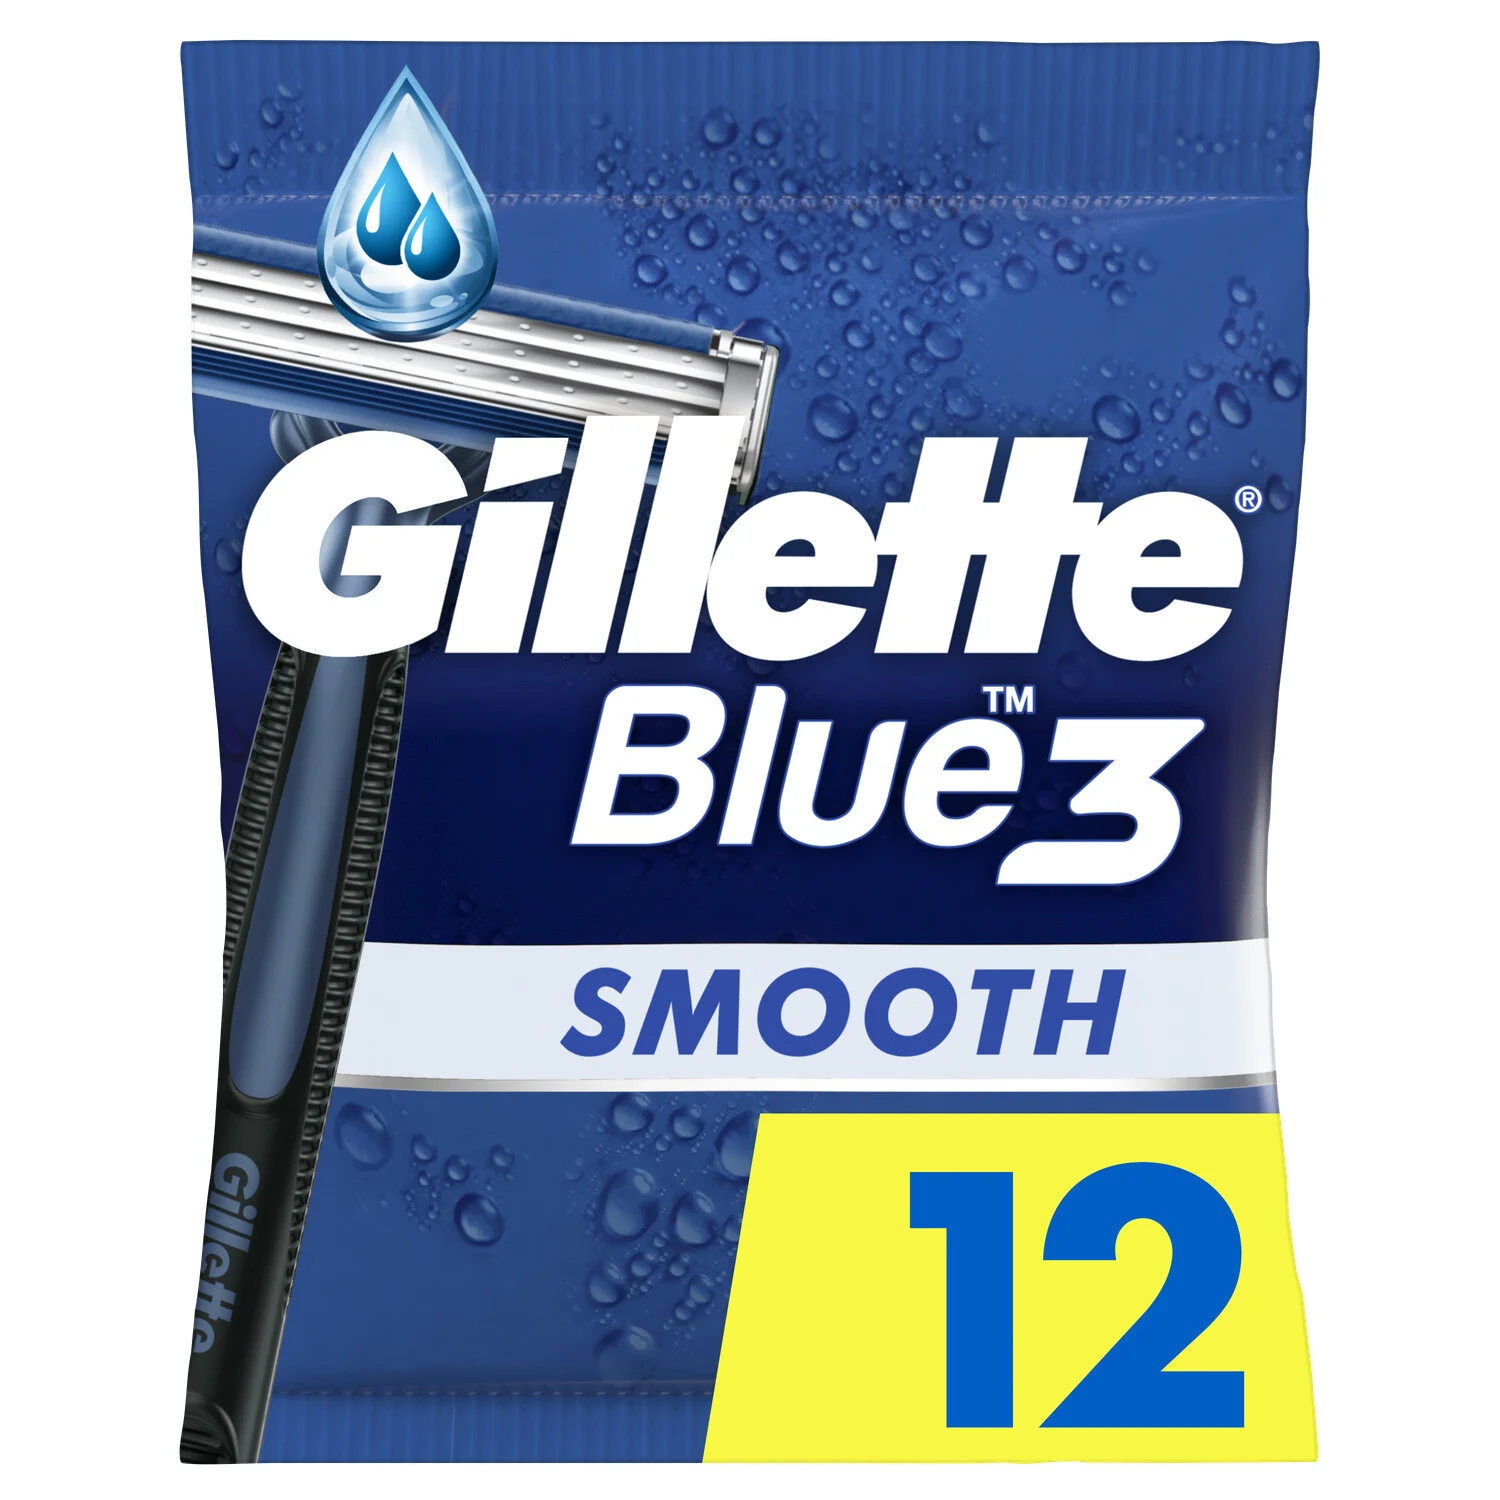 3x4 Jet Smooth Синий3 Gillette